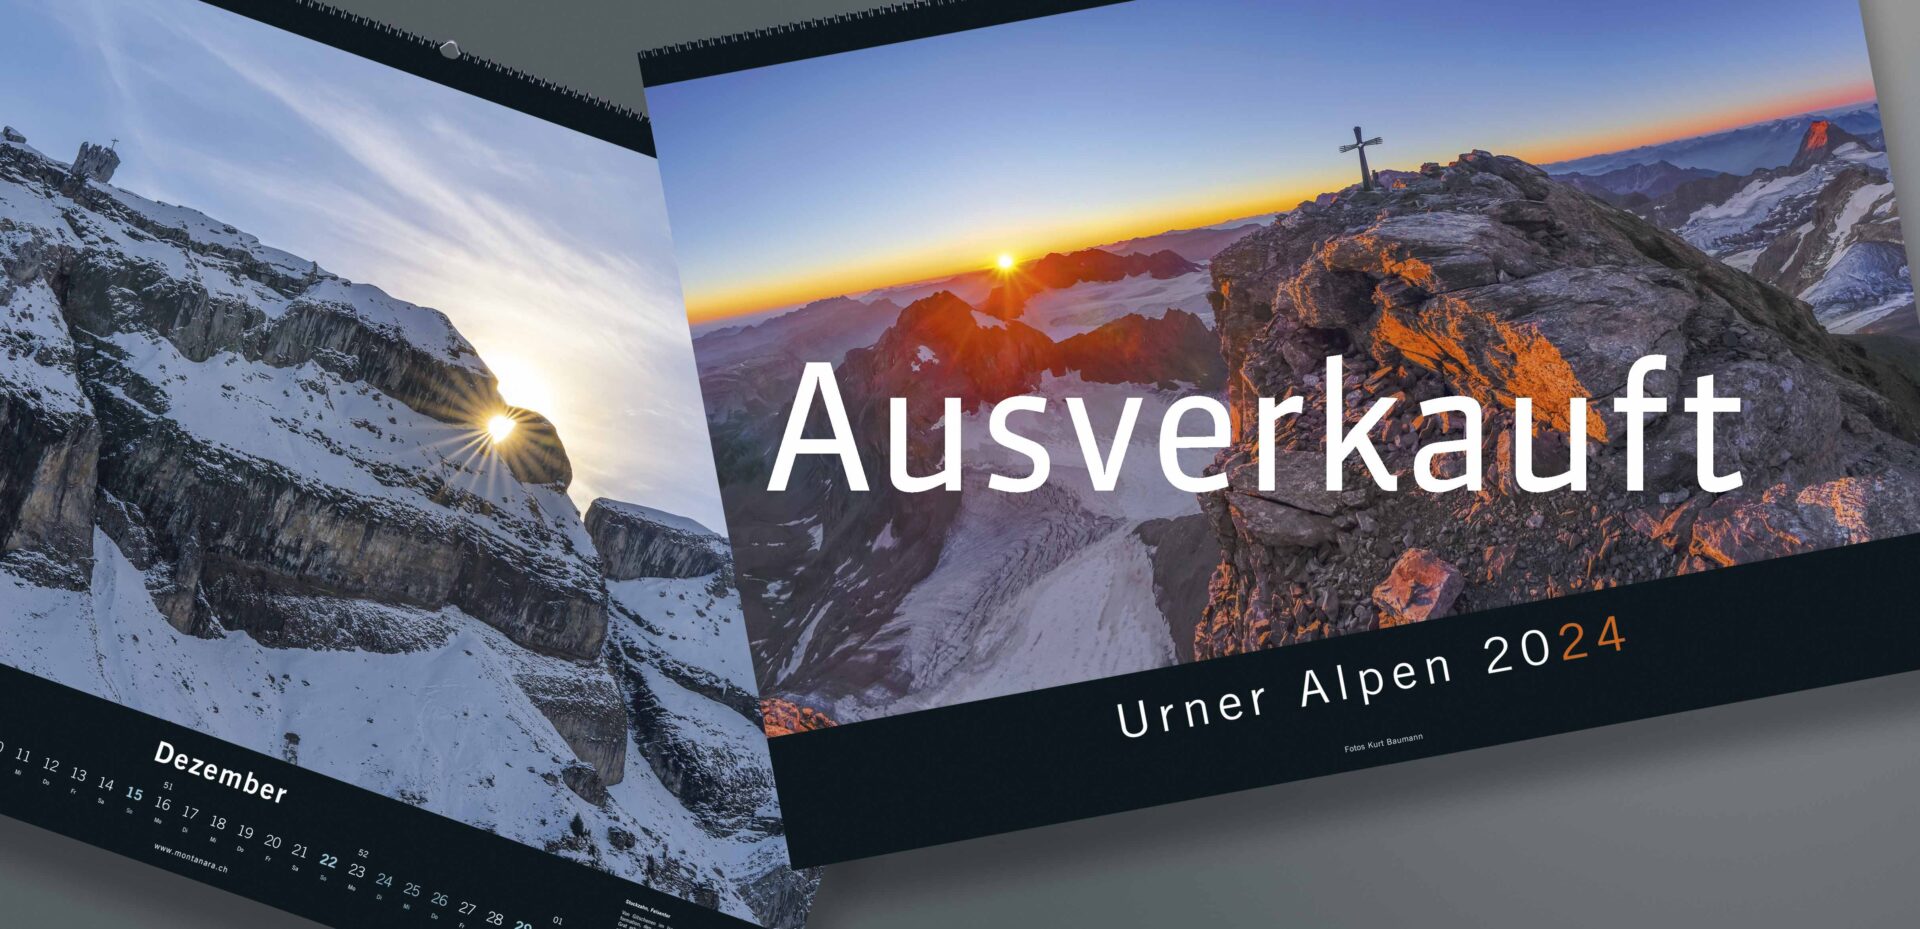 Titel Urner Alpen 2024 Header WEB RGB Ausverkauft